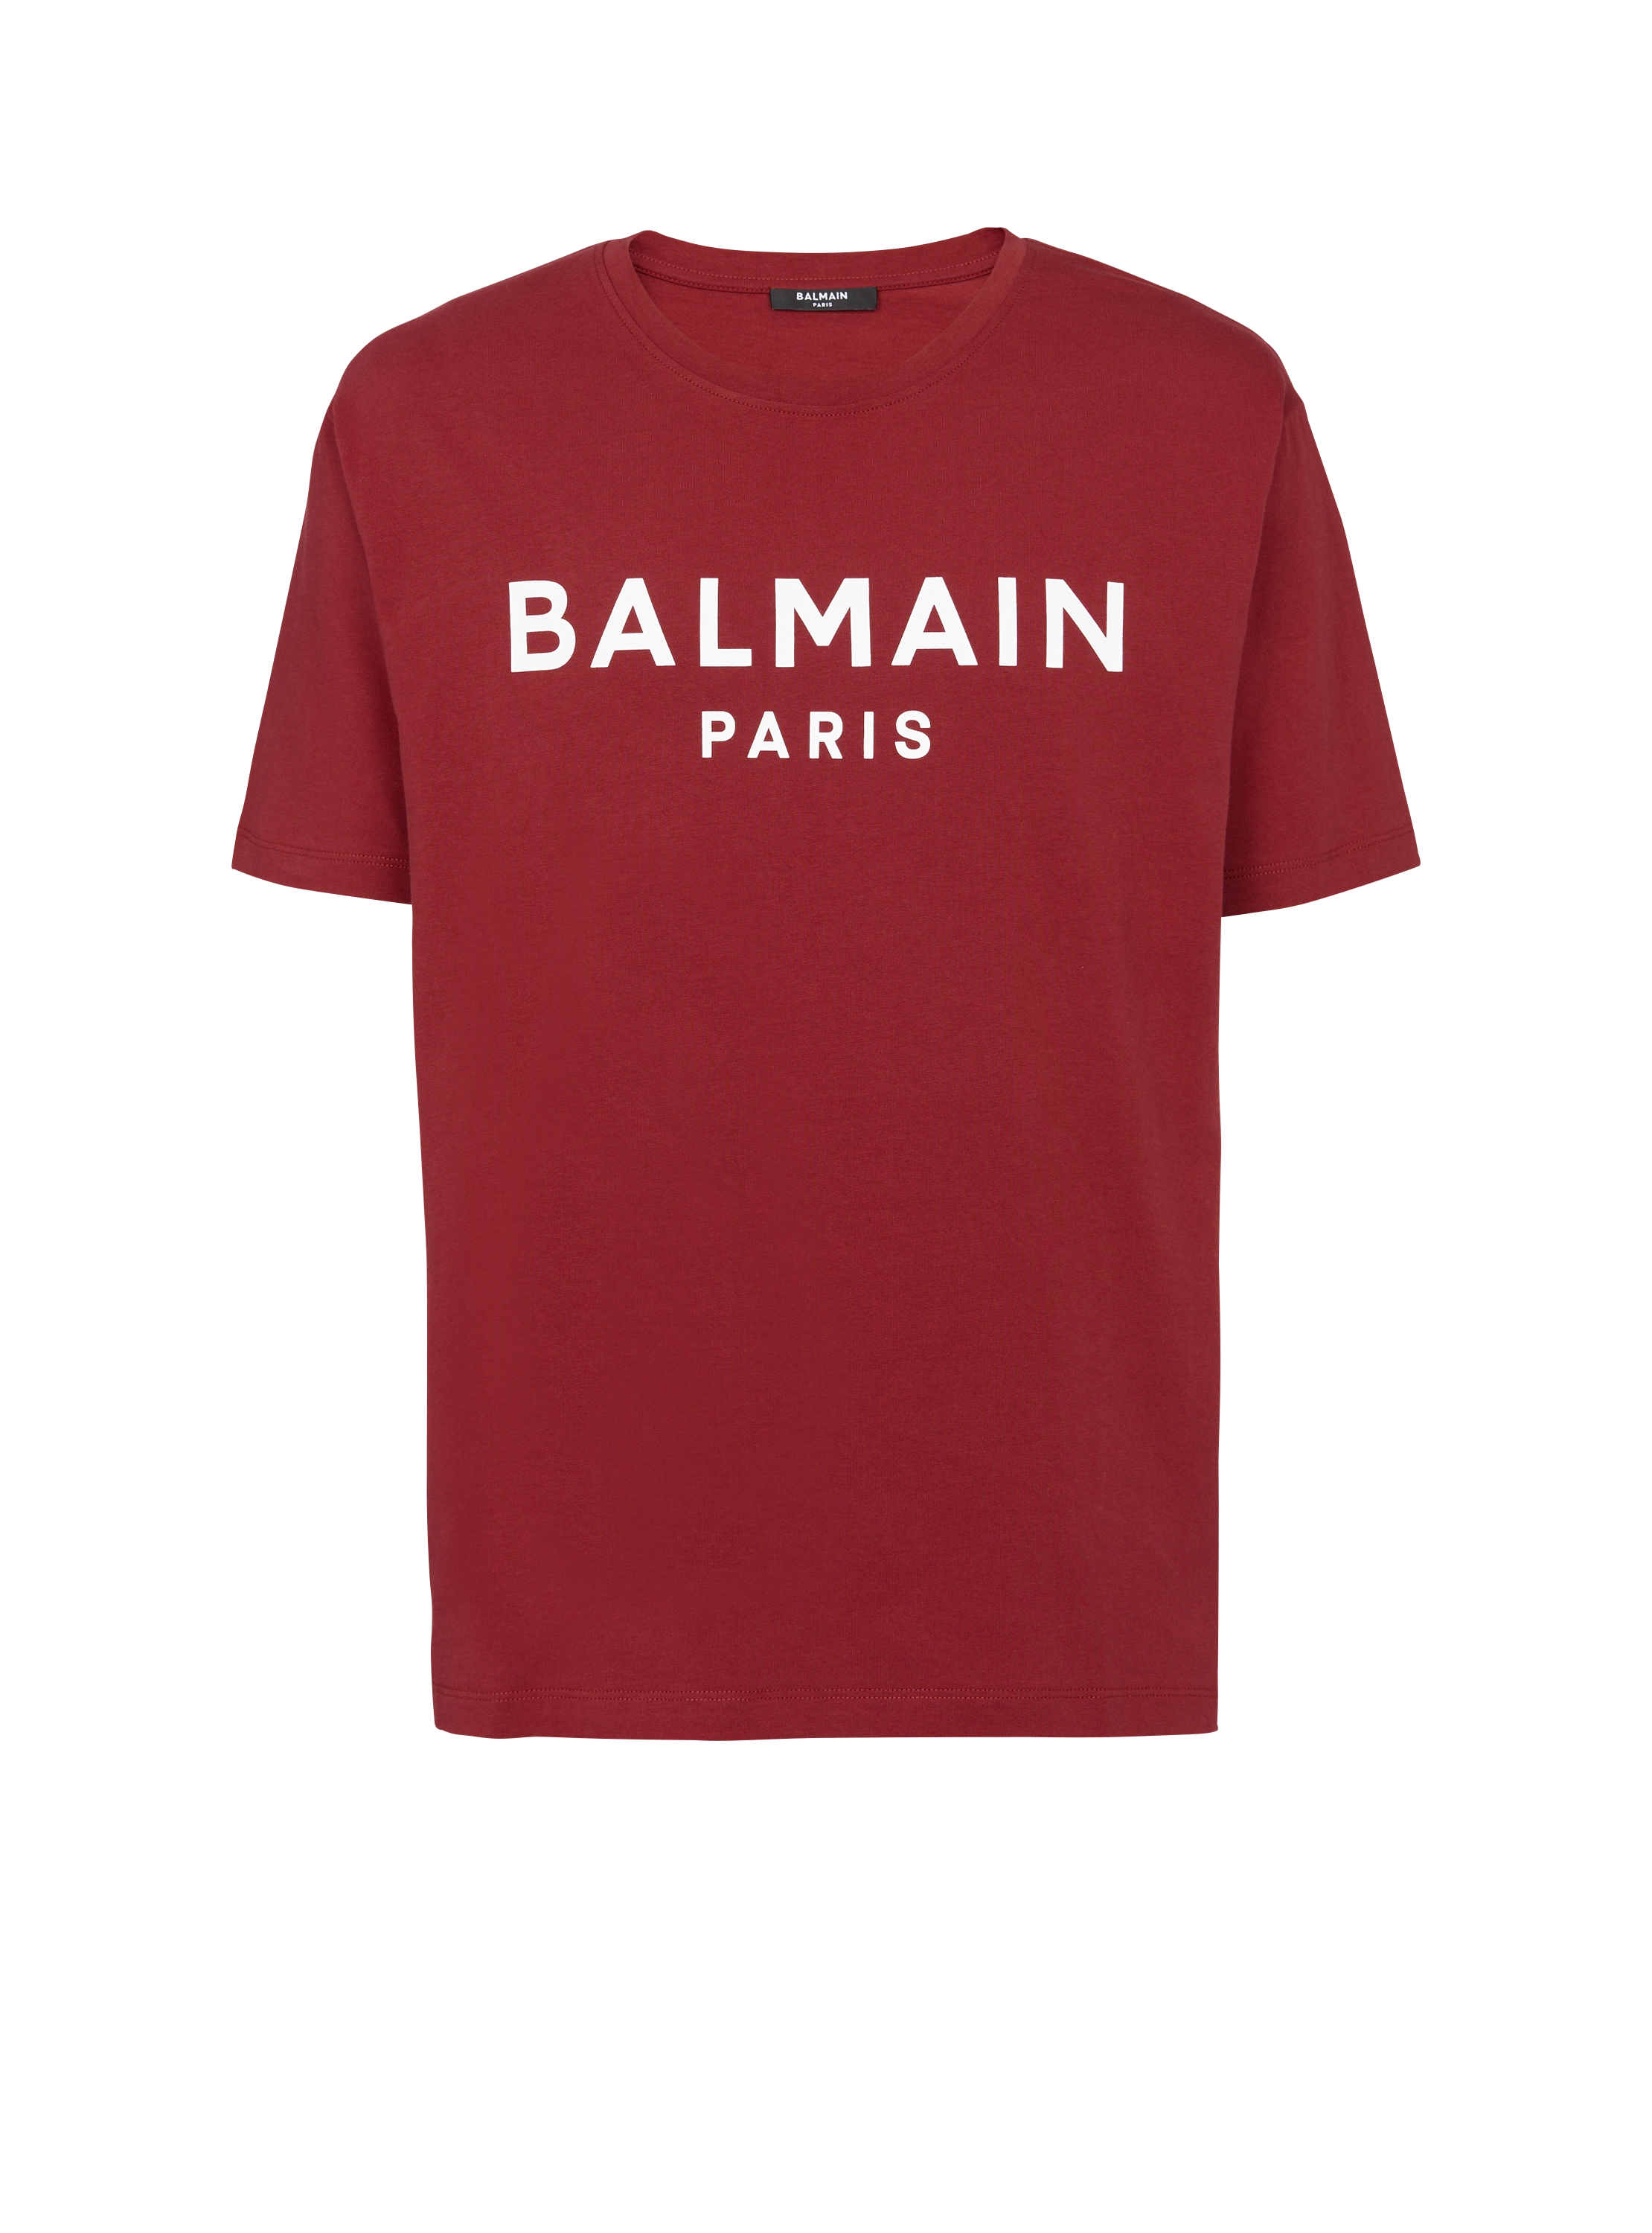 Balmain Paris T-shirt, red, hi-res